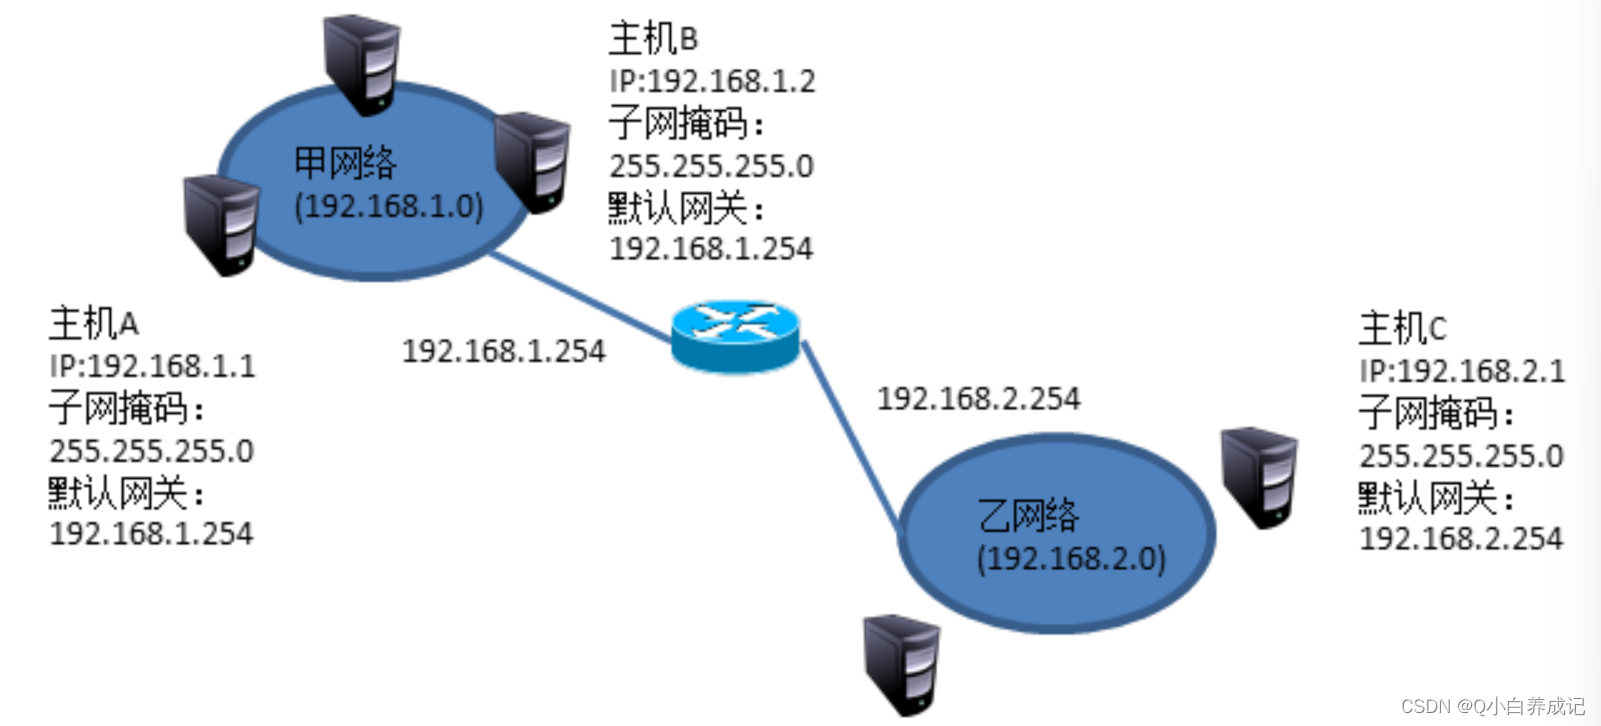 TCP/IP协议及配置、IP地址、子网掩码、网关地址、DNS与DHCP介绍